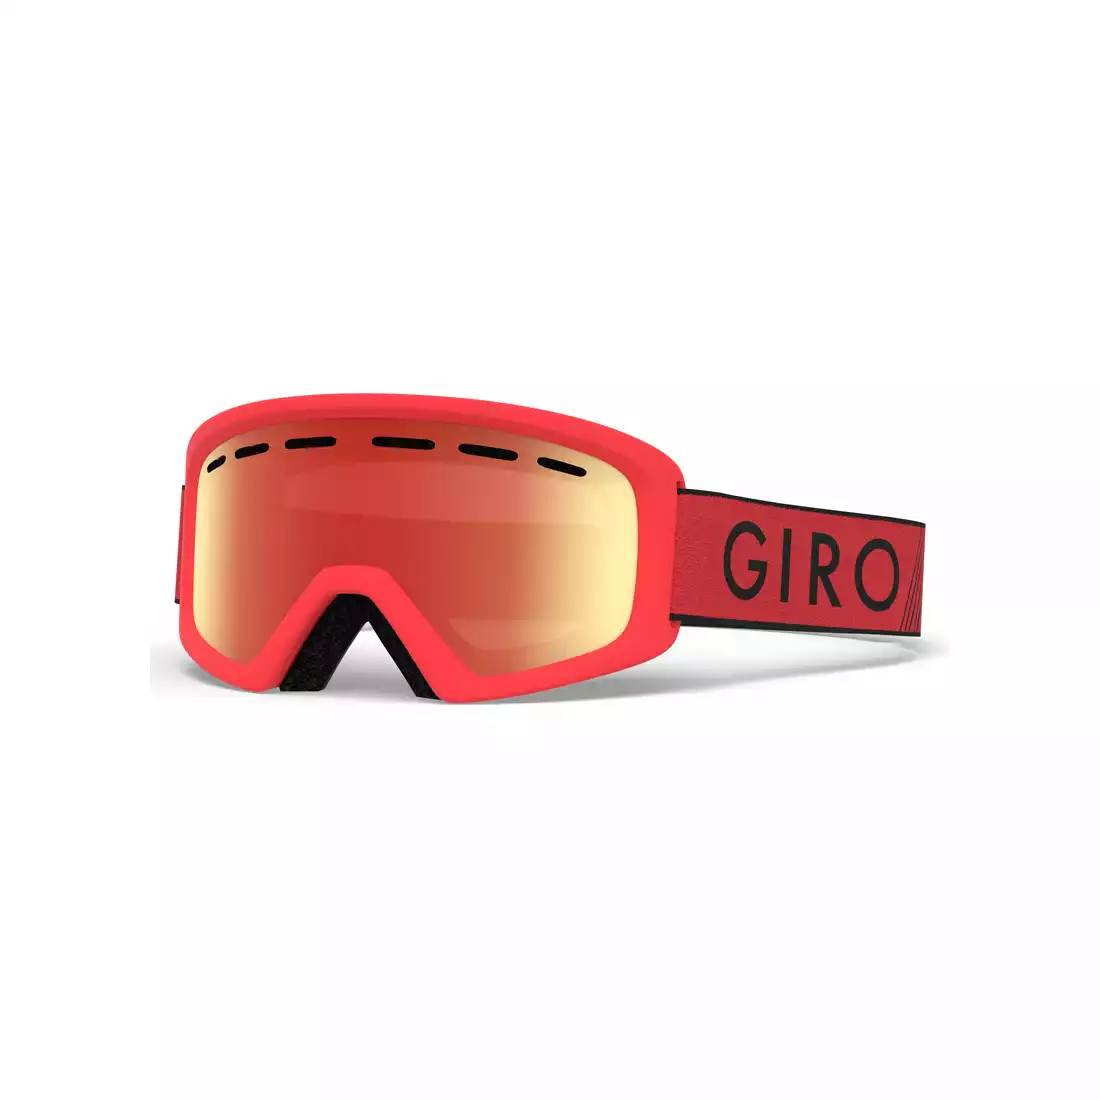 Juniorskie gogle narciarskie / snowboardowe REV RED BLACK ZOOM GR-7094700